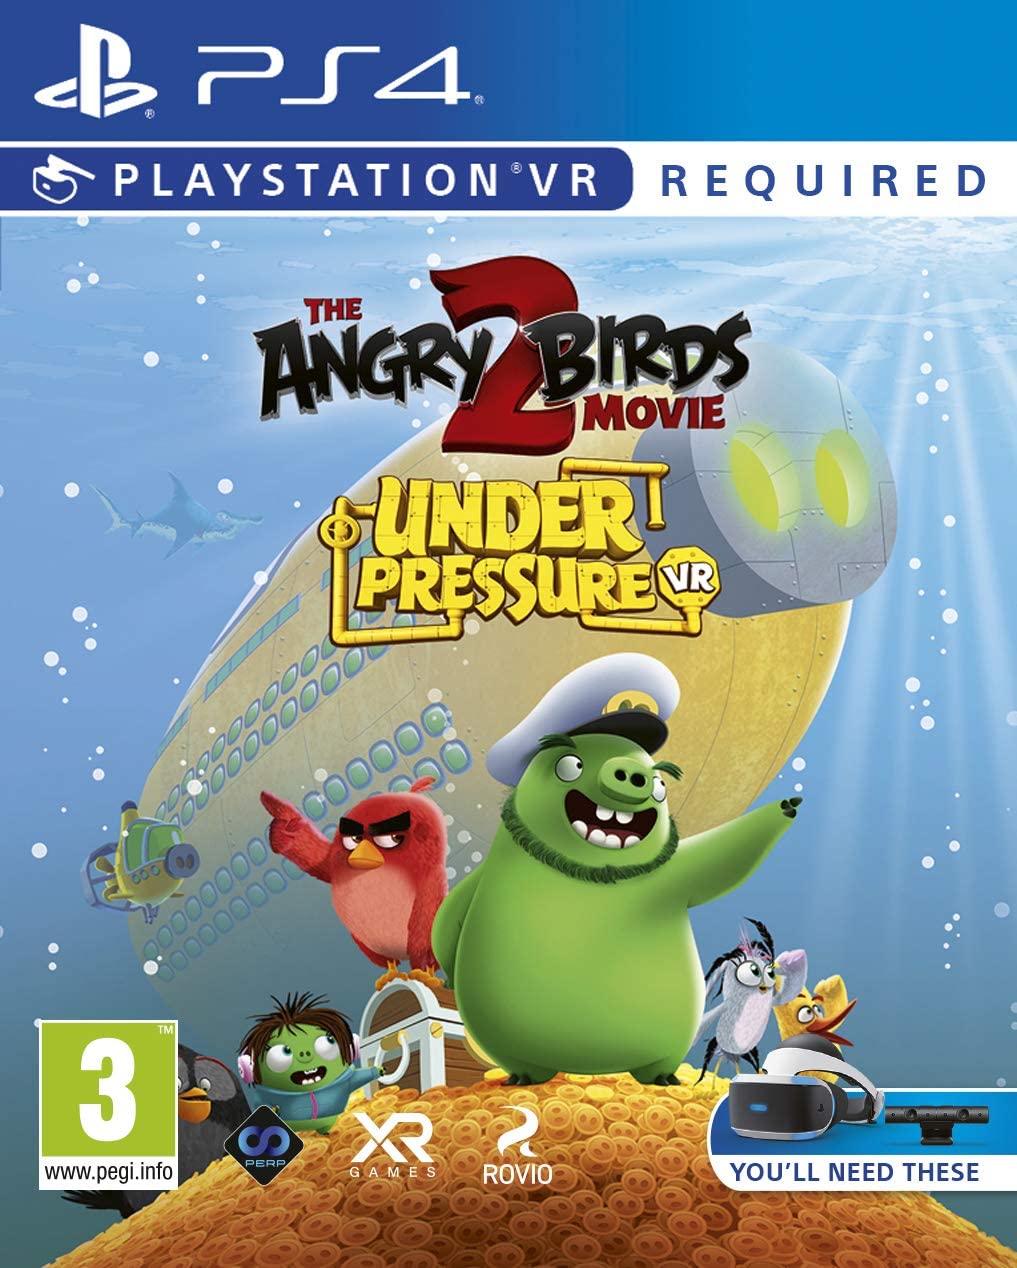 The Angry Birds Movie 2 VR: Under Pressure (PSVR) (PS4)